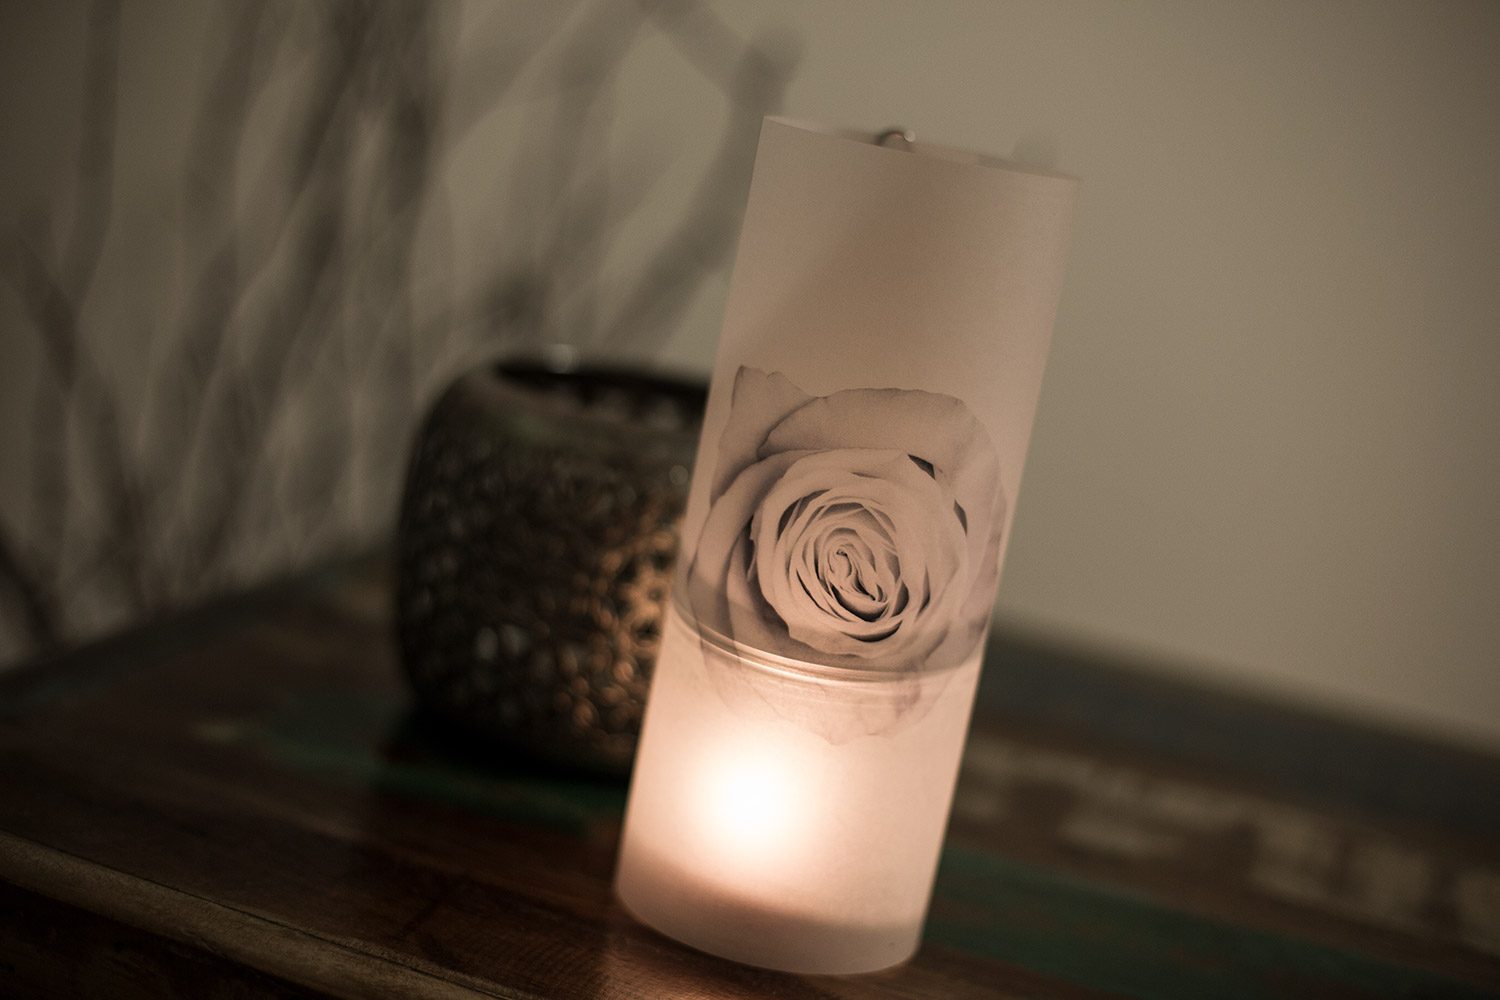 Paper Light Shade Motiv "Rose" - The Special One